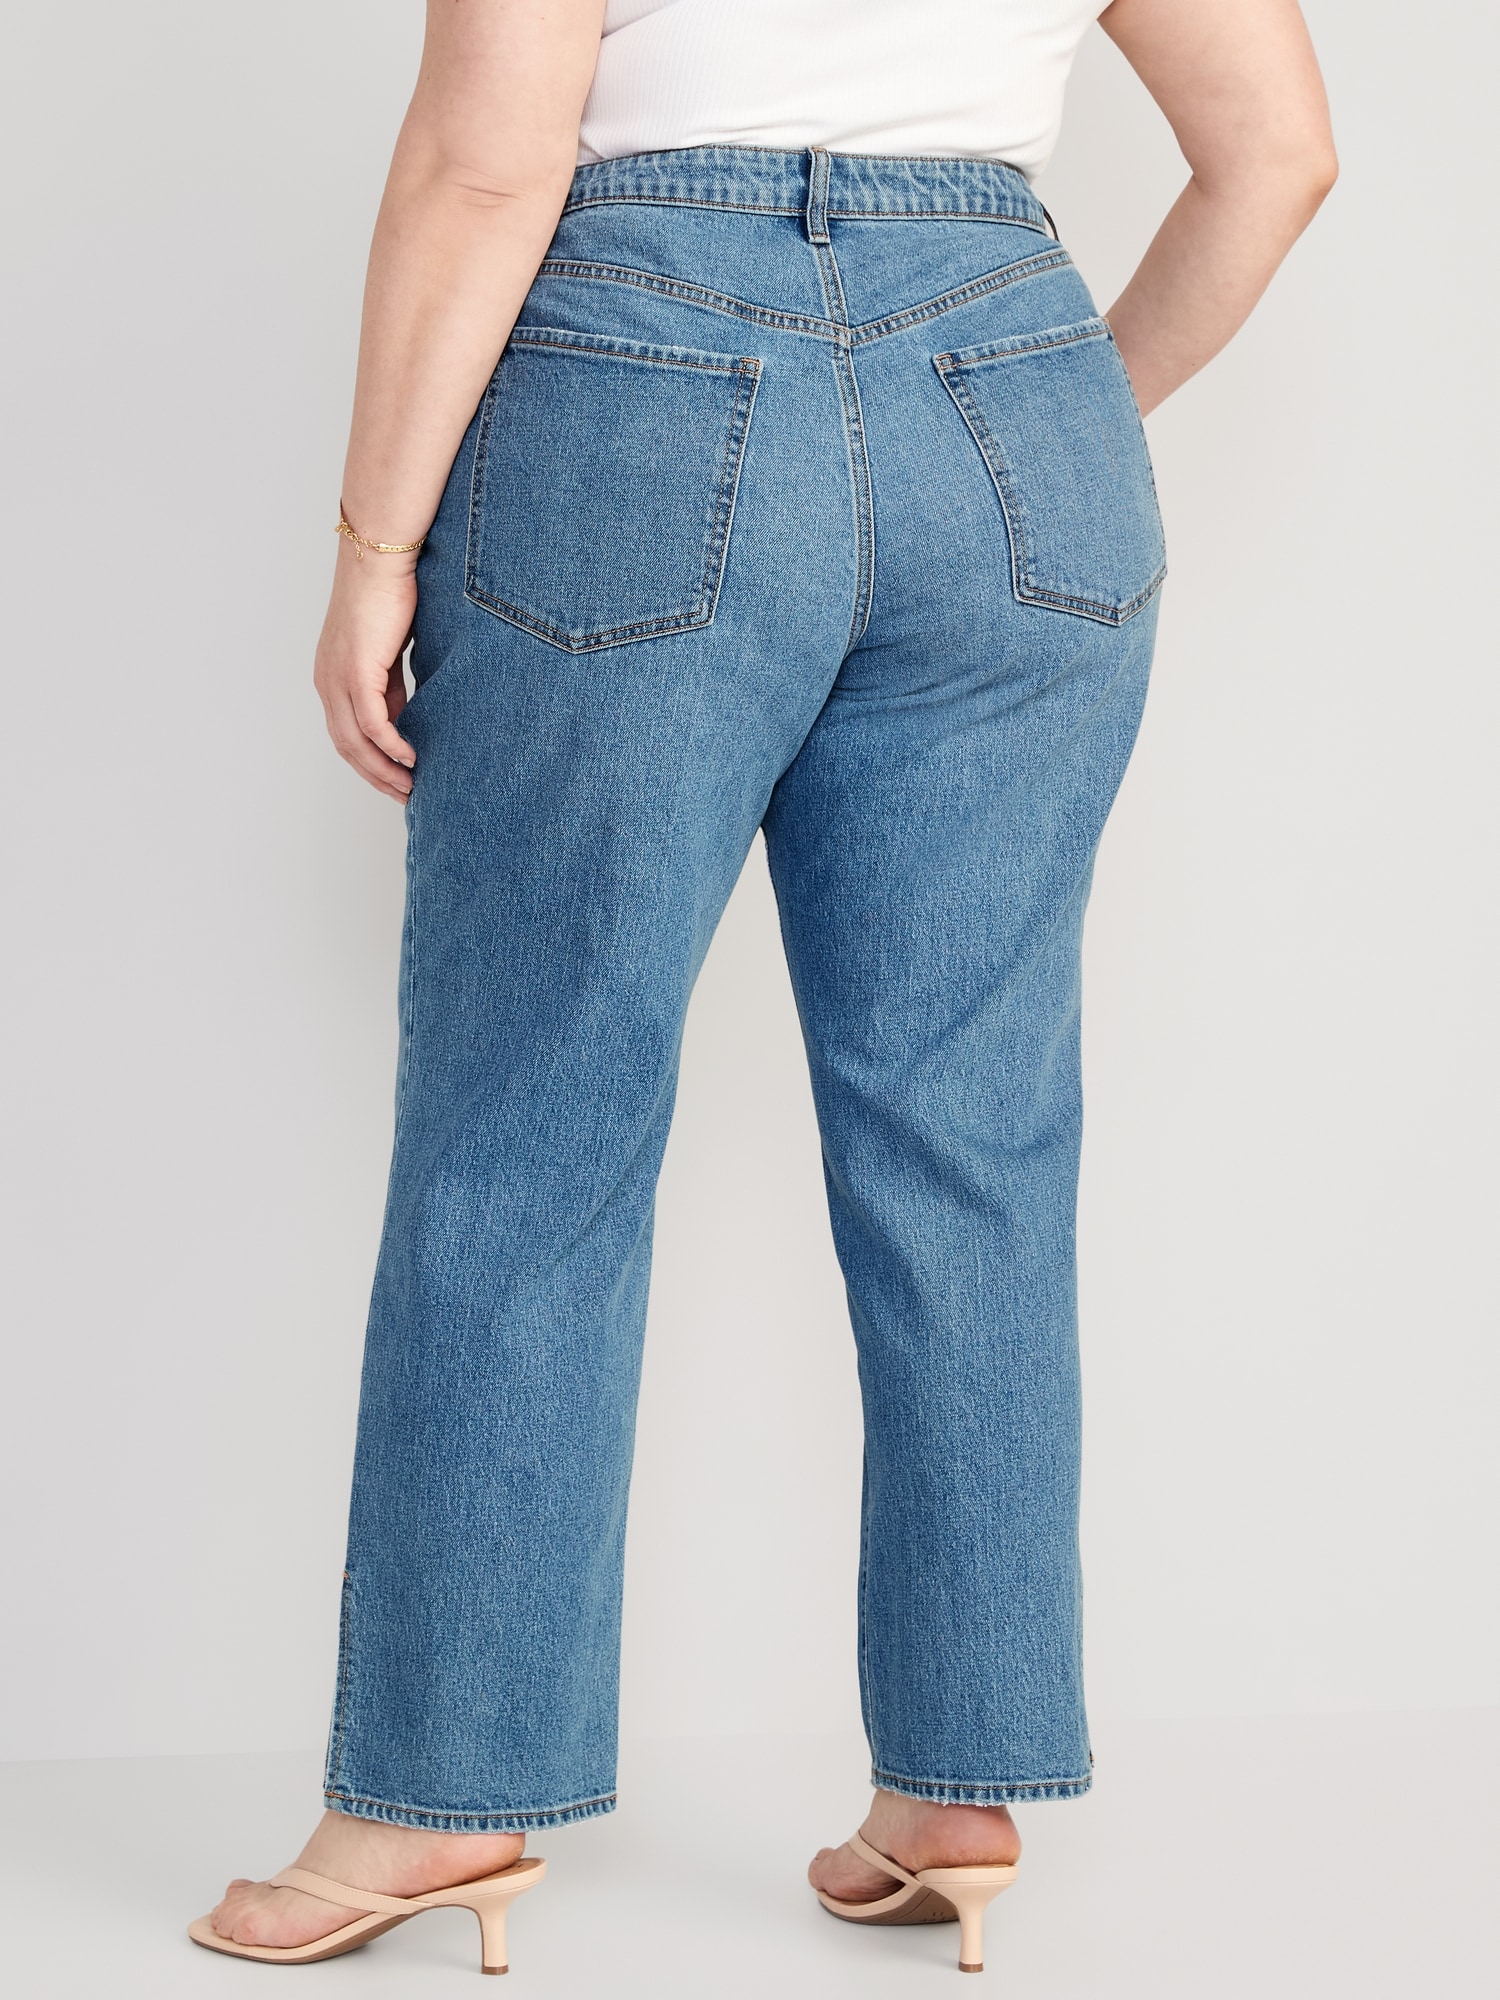 Curvy High-Waisted Button-Fly OG Loose Side-Slit Jeans for Women | Old Navy